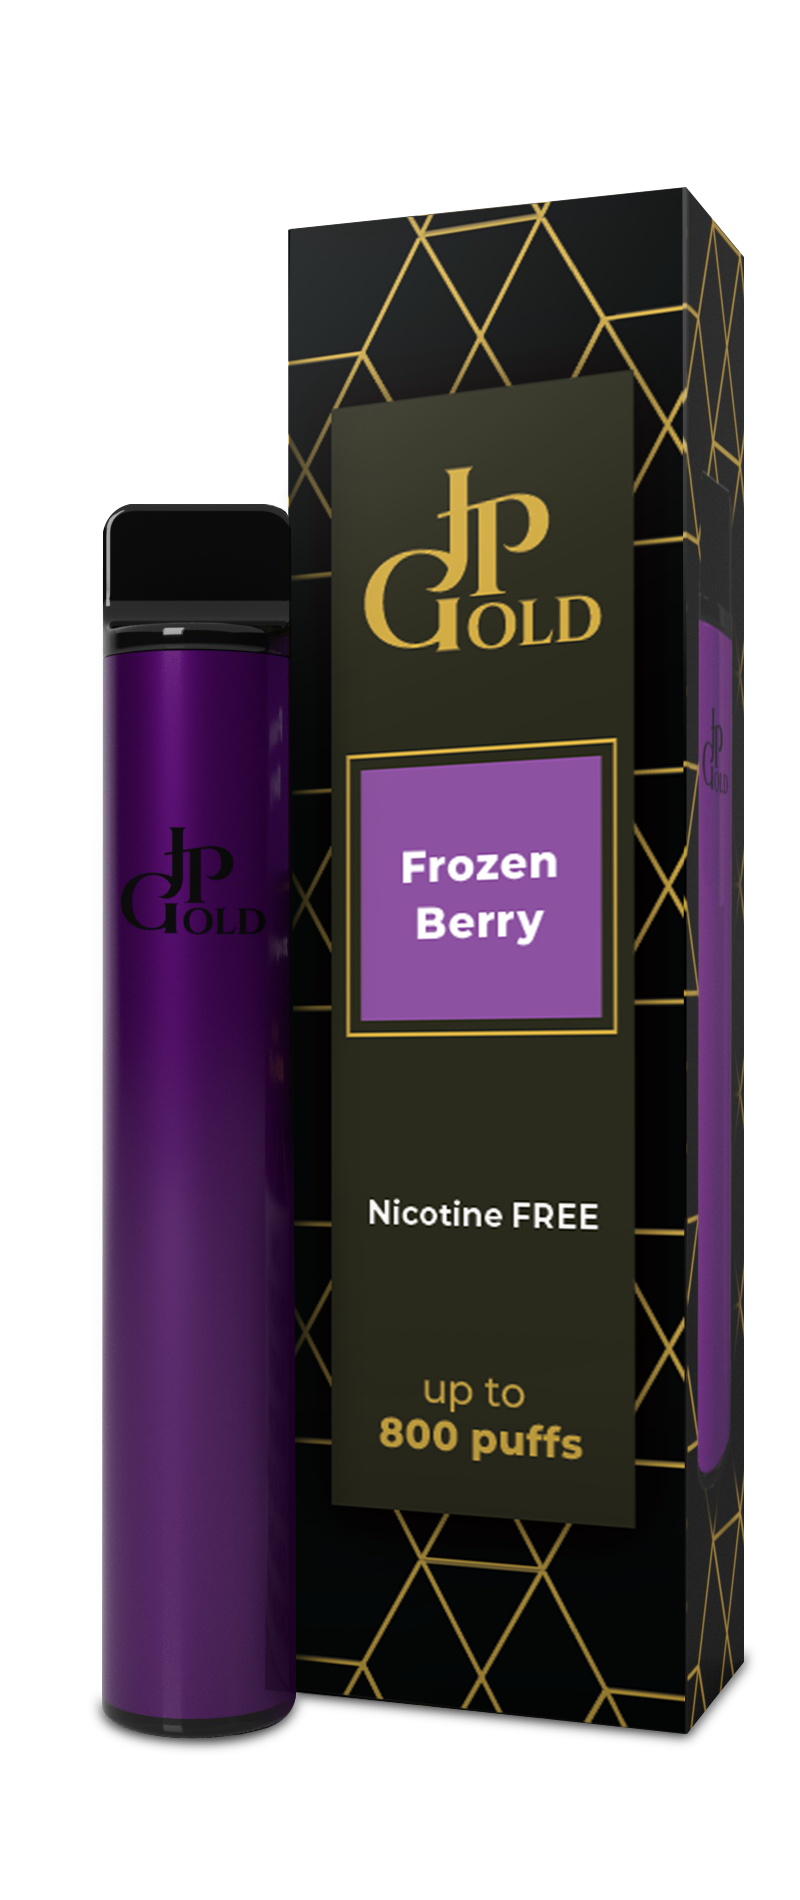 JP GOLD Premium, Frozen Berry, nicotine free